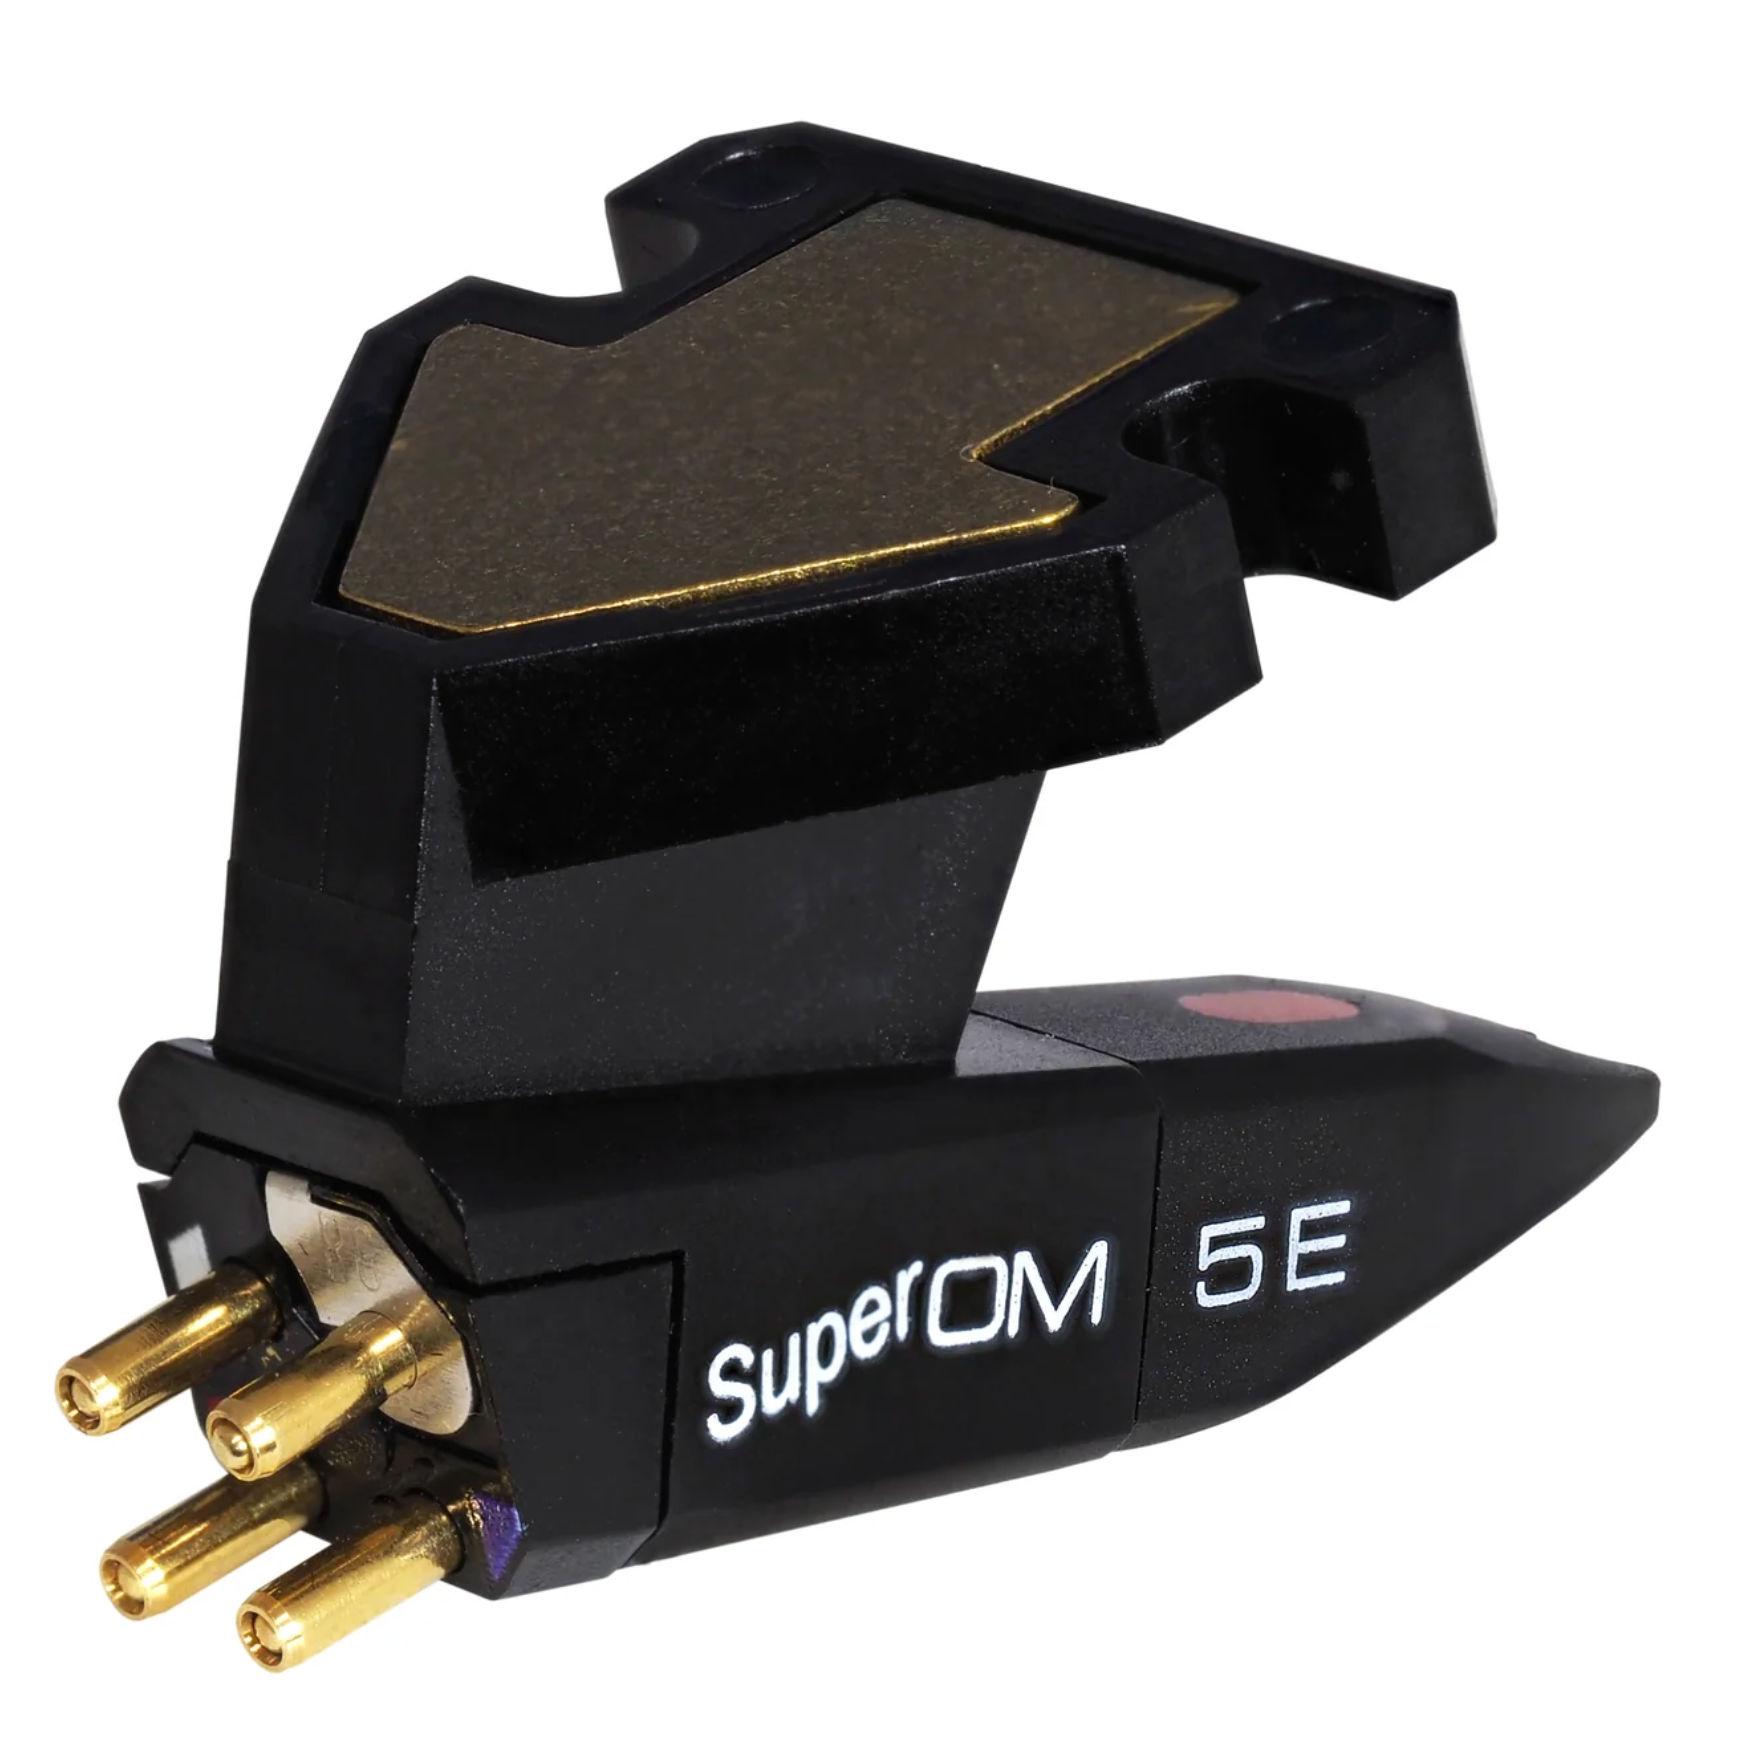 Ortofon Super OM 5E Moving Magnet Cartridge Image showing pins